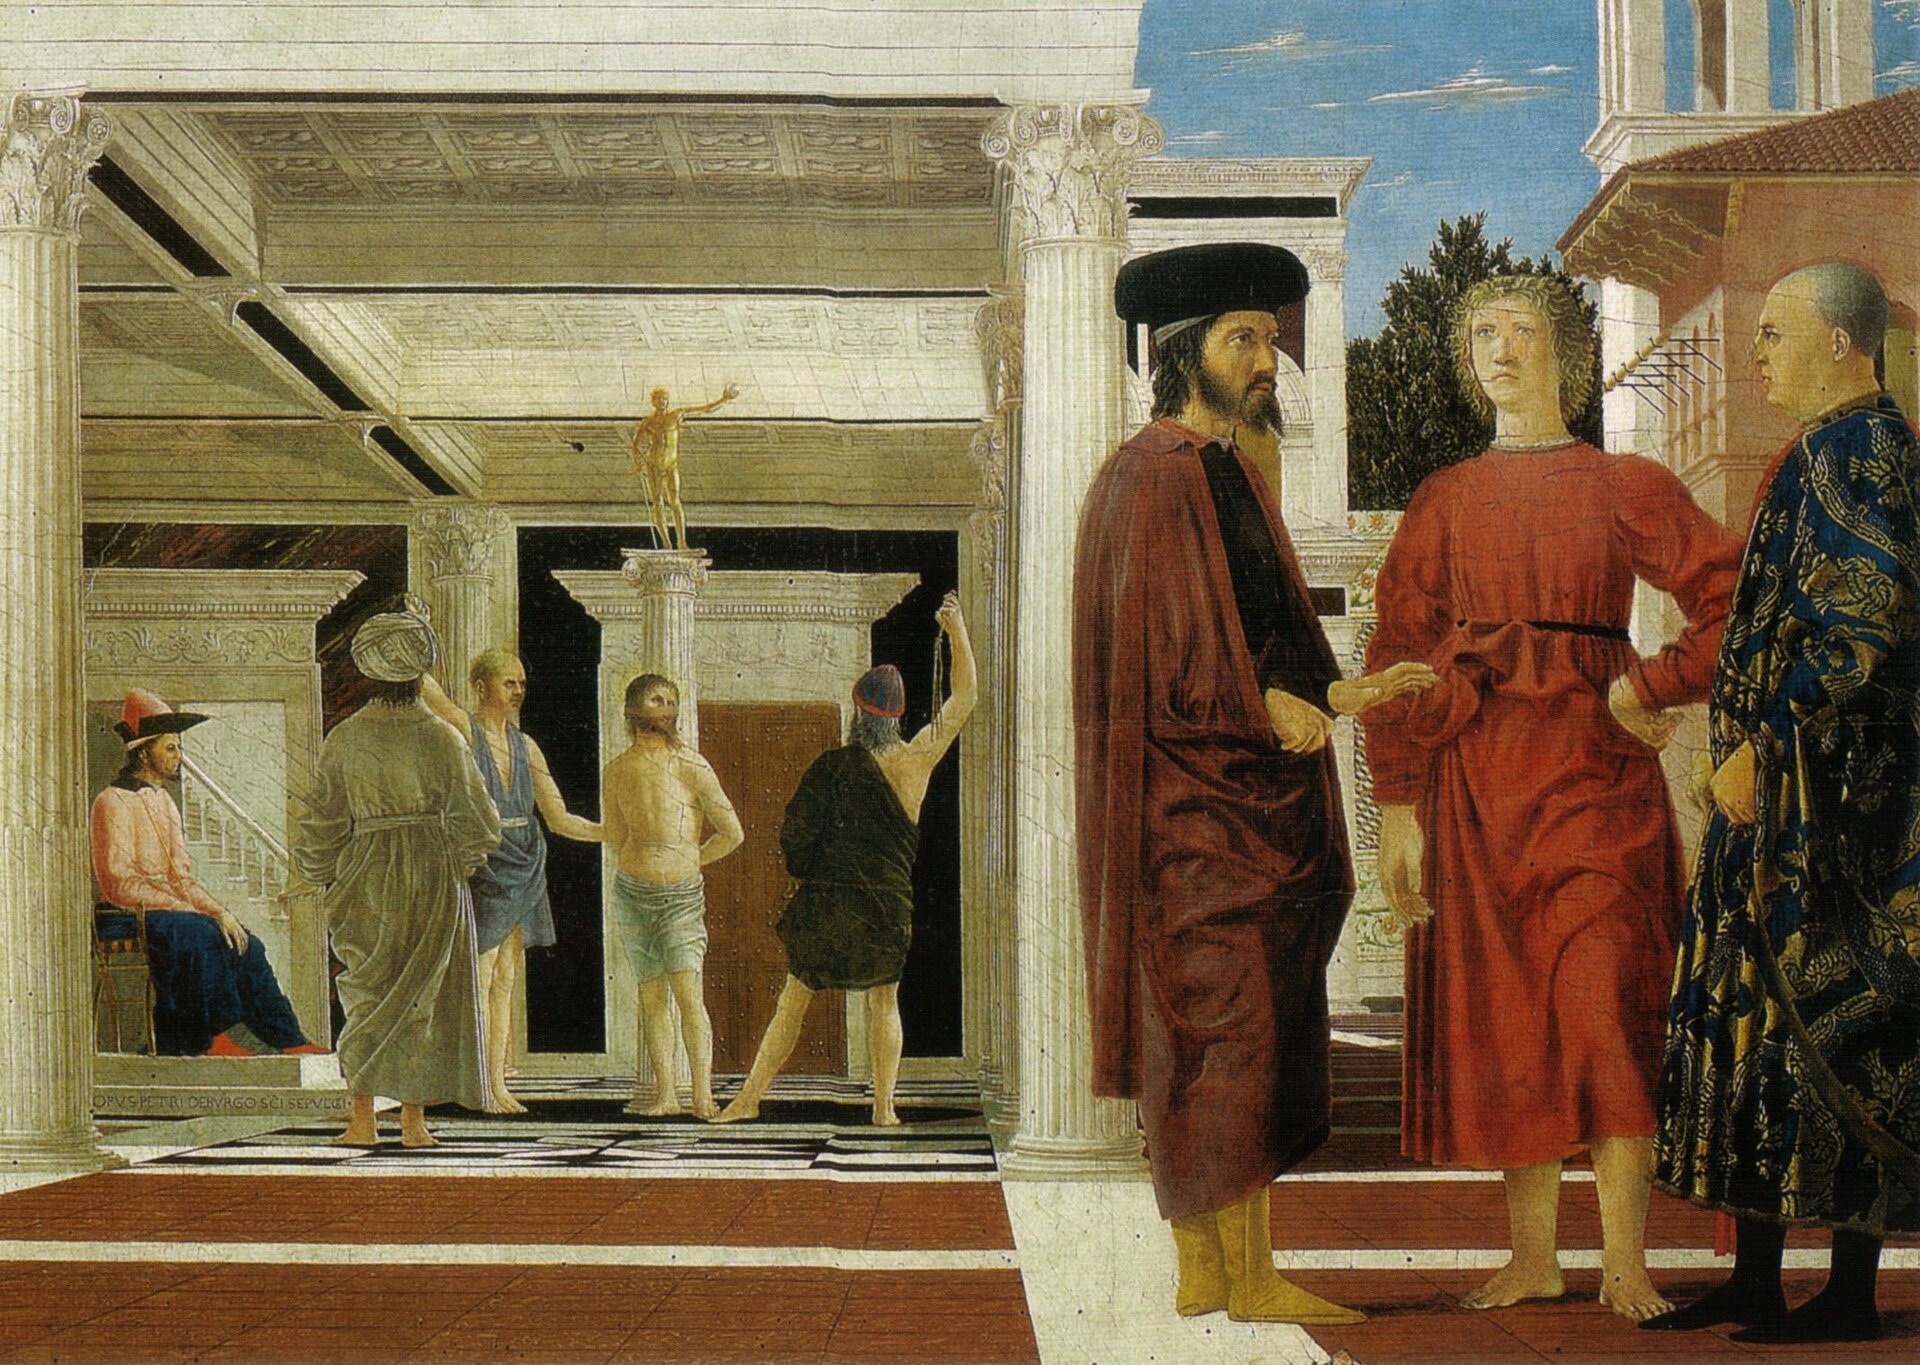 Ilustracja przedstawia obraz Piera della Francesca pt. „Sen św. Hieronima”.